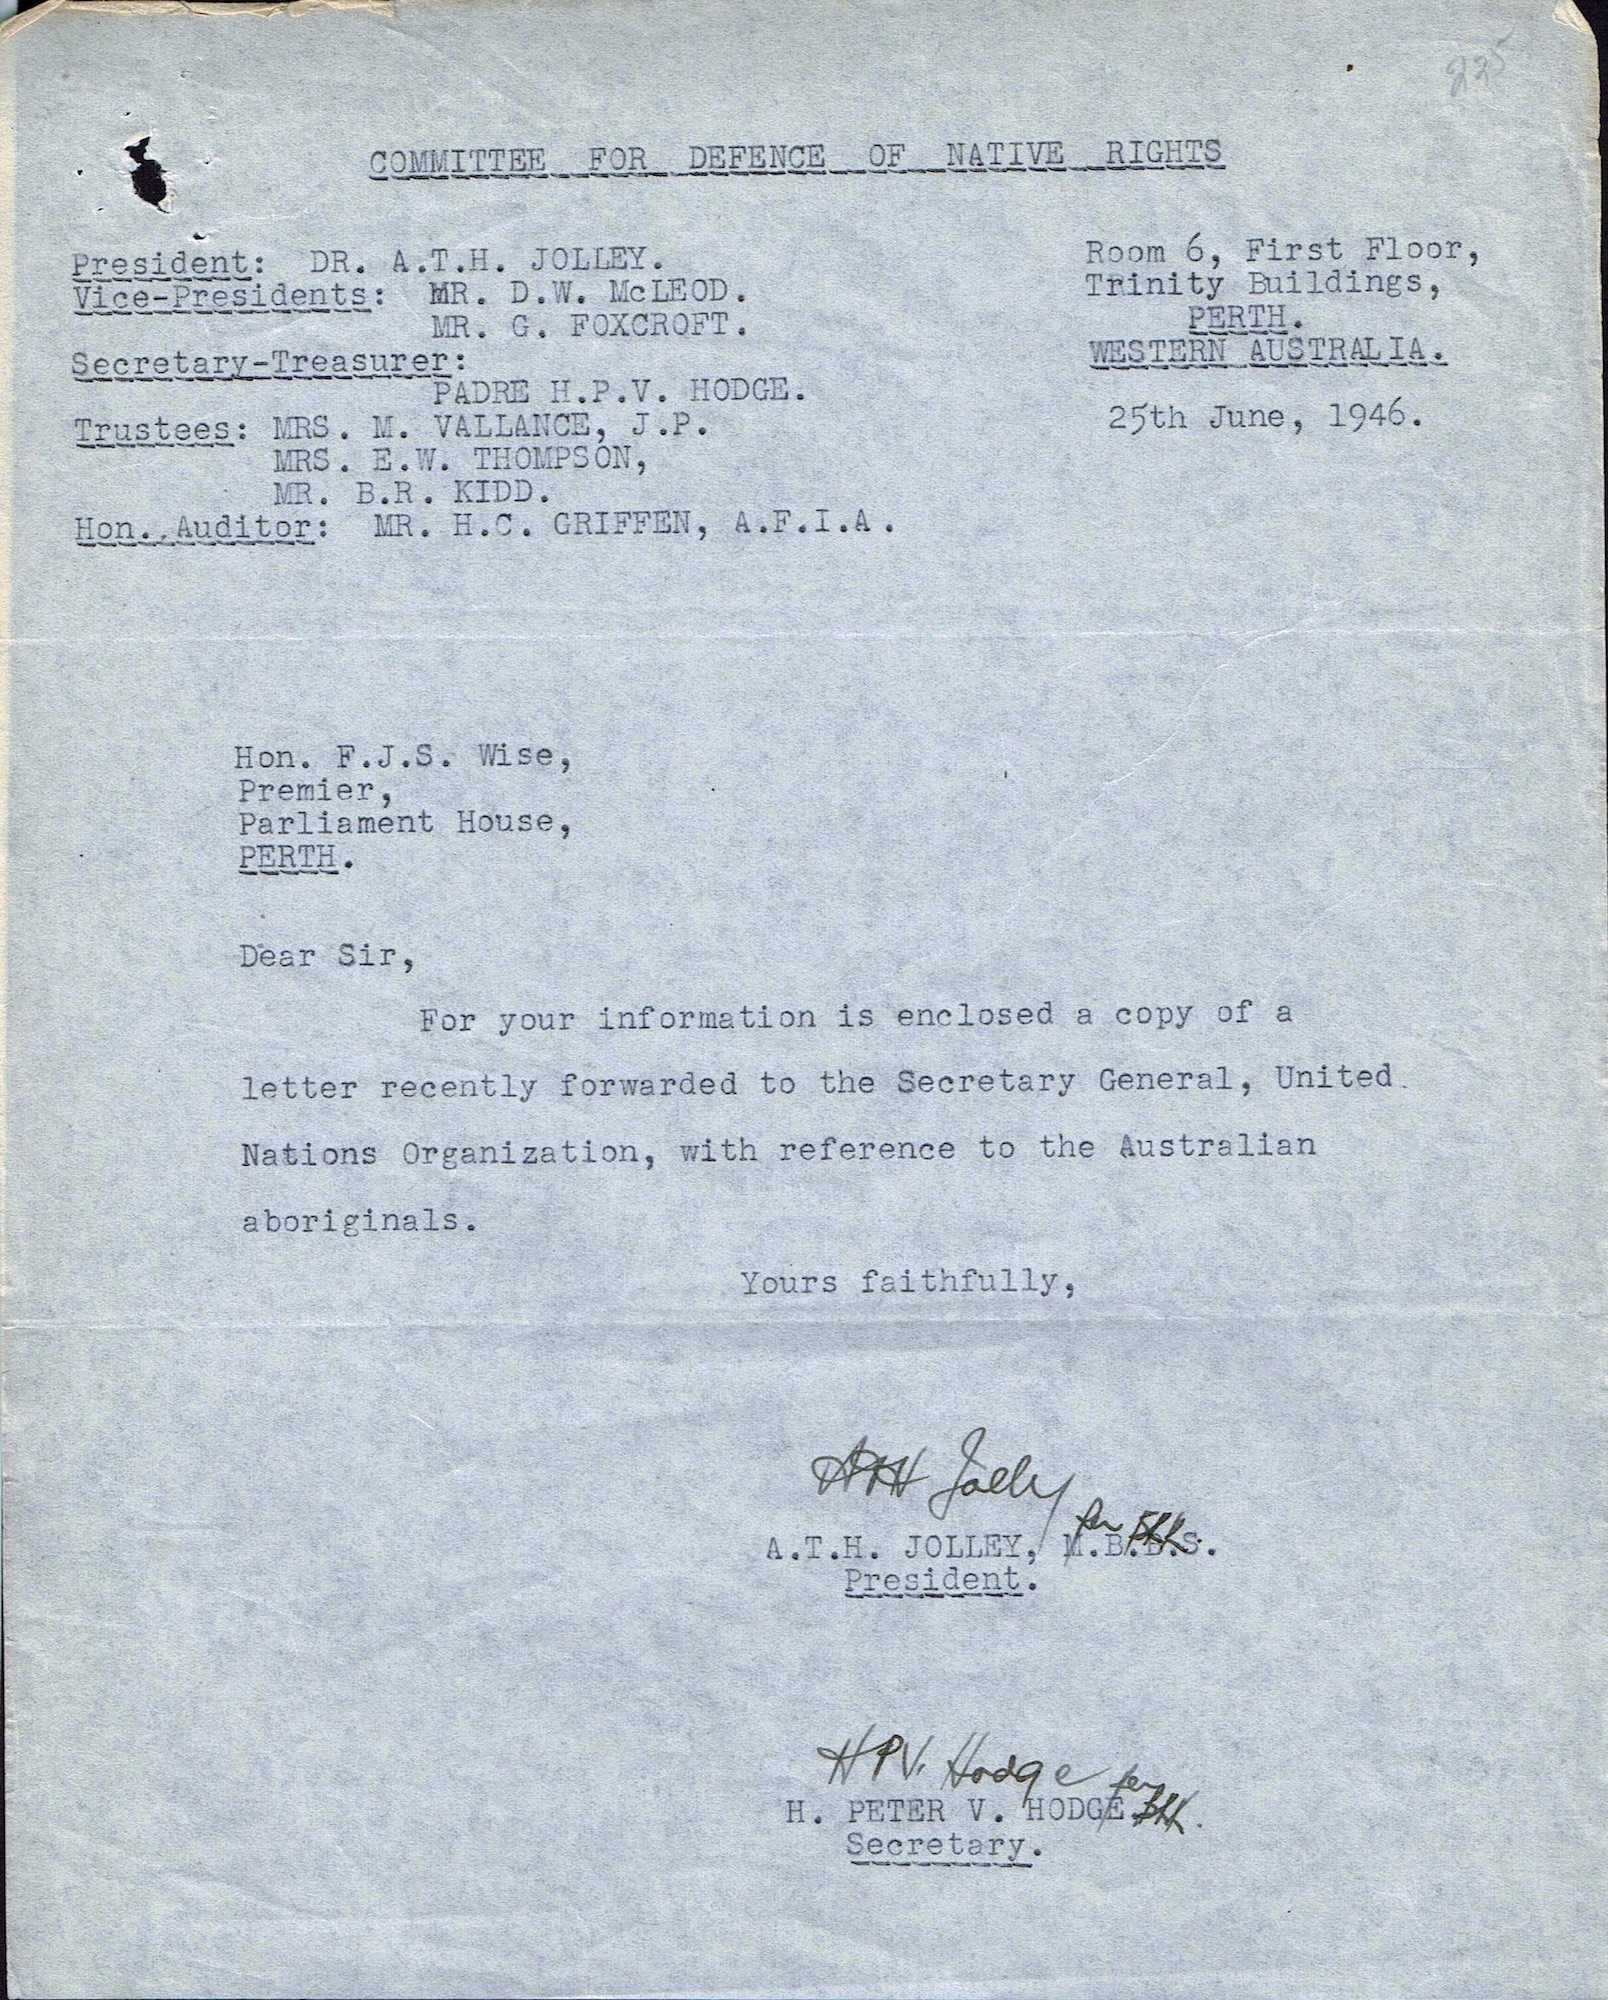 CDNR to Premier Wise, 25 June 1946